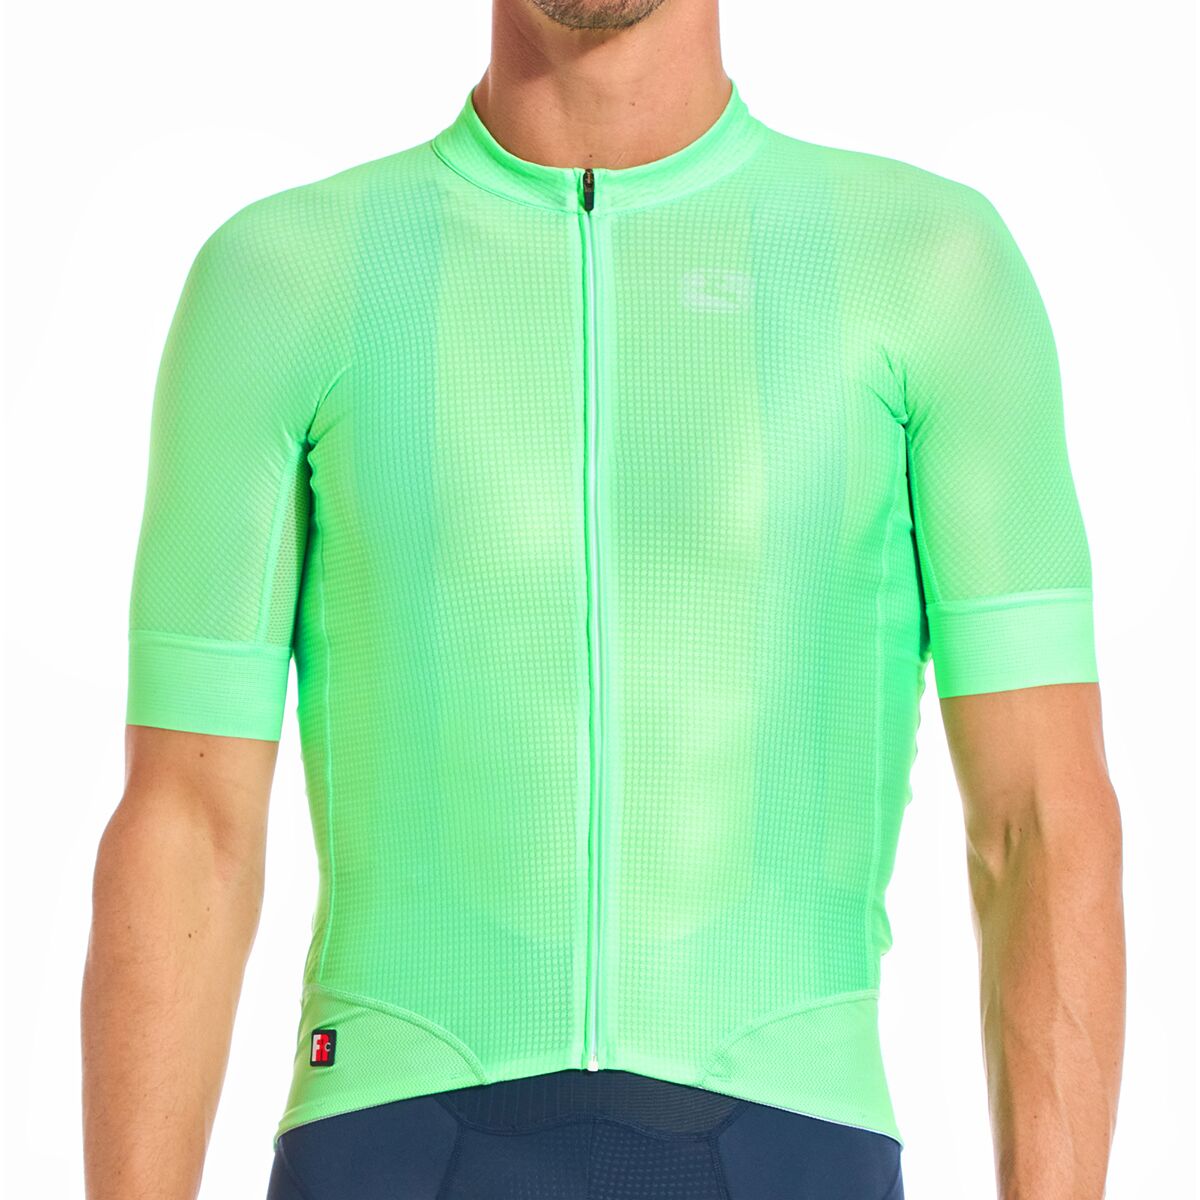 Giordana FR-C Pro Short-Sleeve Jersey - Men's Neon Mint, XXL